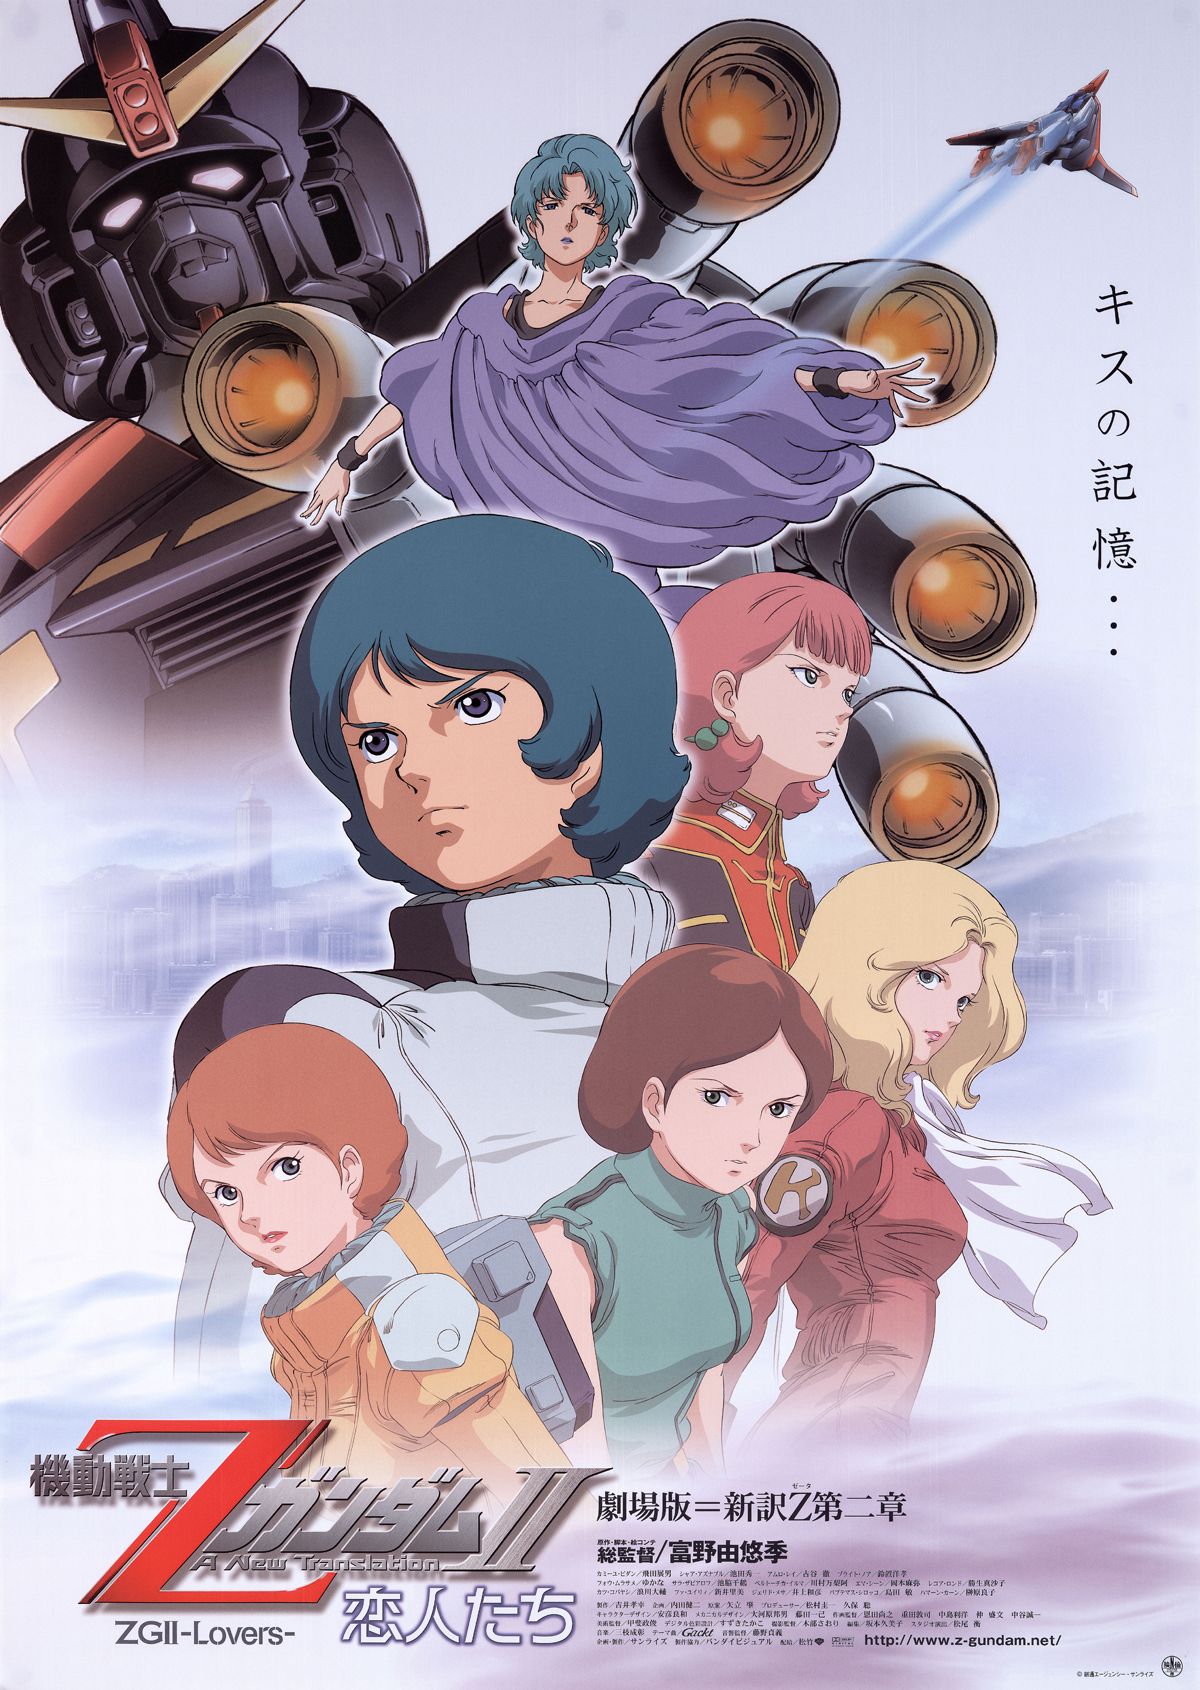 Mobile Suit Z Gundam A New Translation movie 2 visual